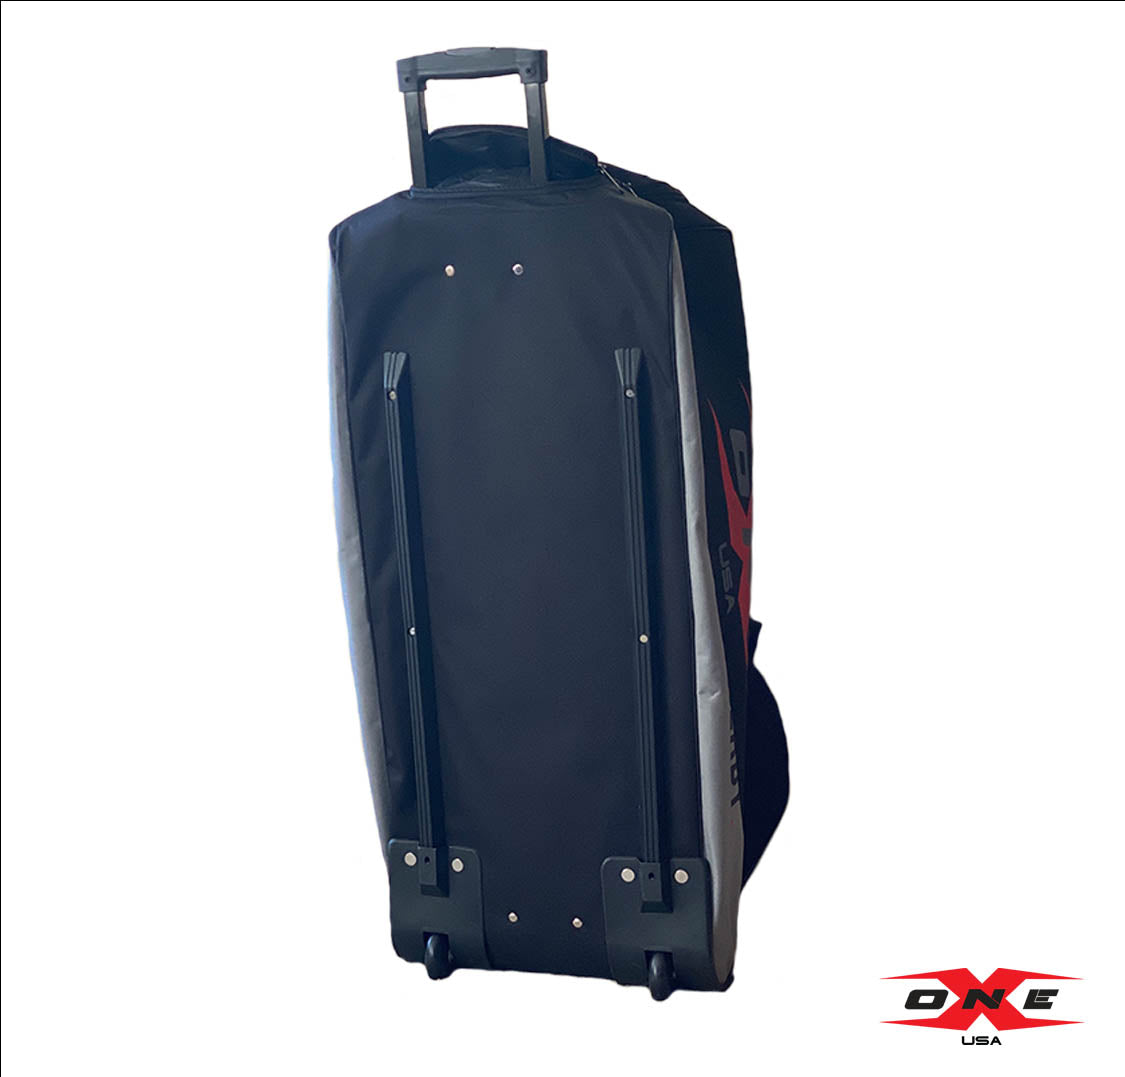 OneX USA Rolling  Gear Bag - Always Race Ready.